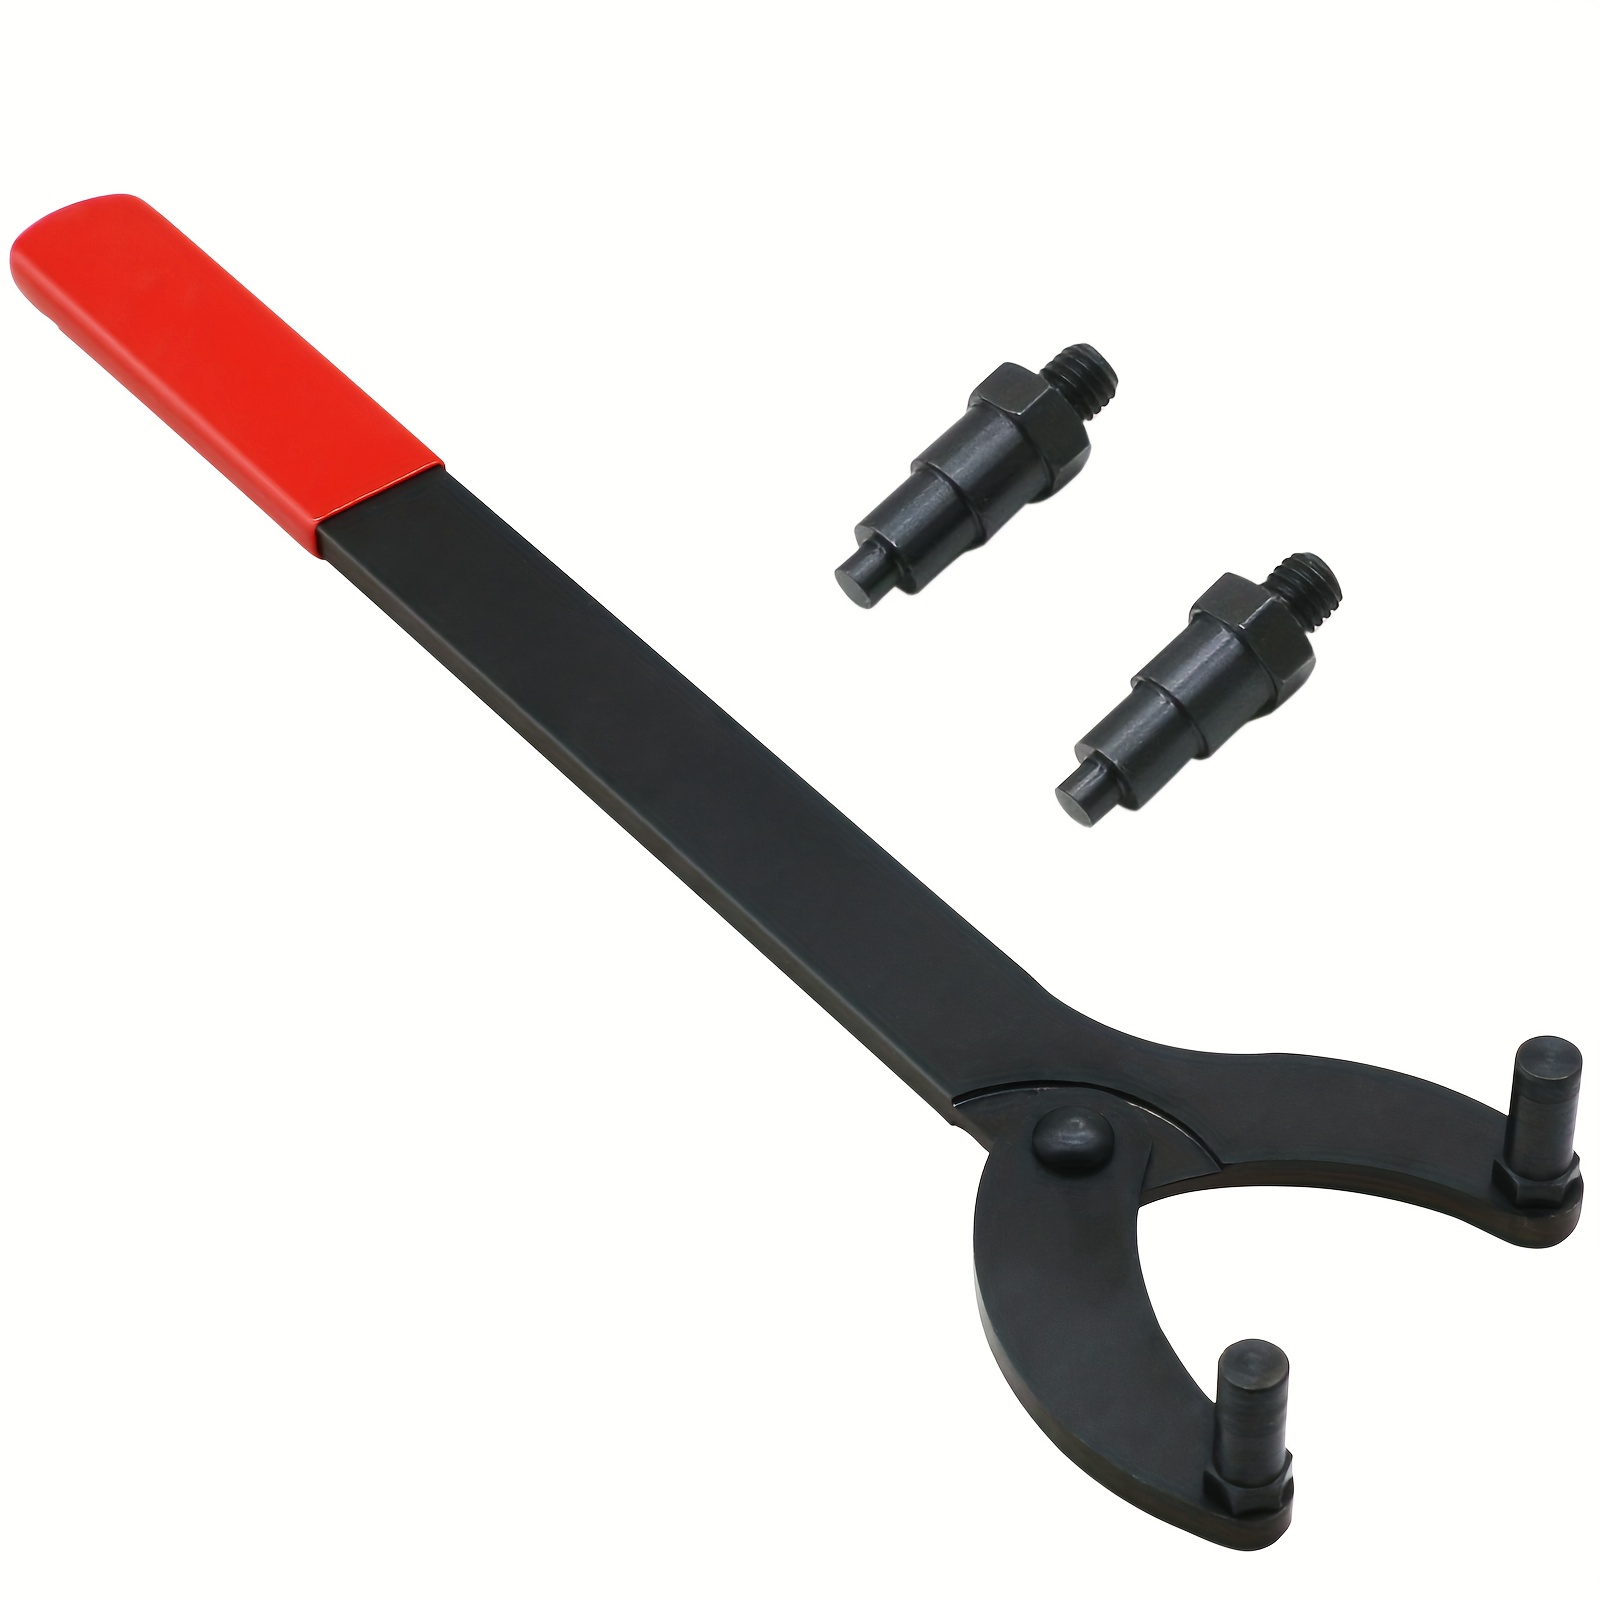 T10172 Car Timing Locking Sprocket Adjustable Wrench Camshaft Pulley Holder  Tool Belt For VW Audi Skoda VAG 3036 Repair Tools - AliExpress